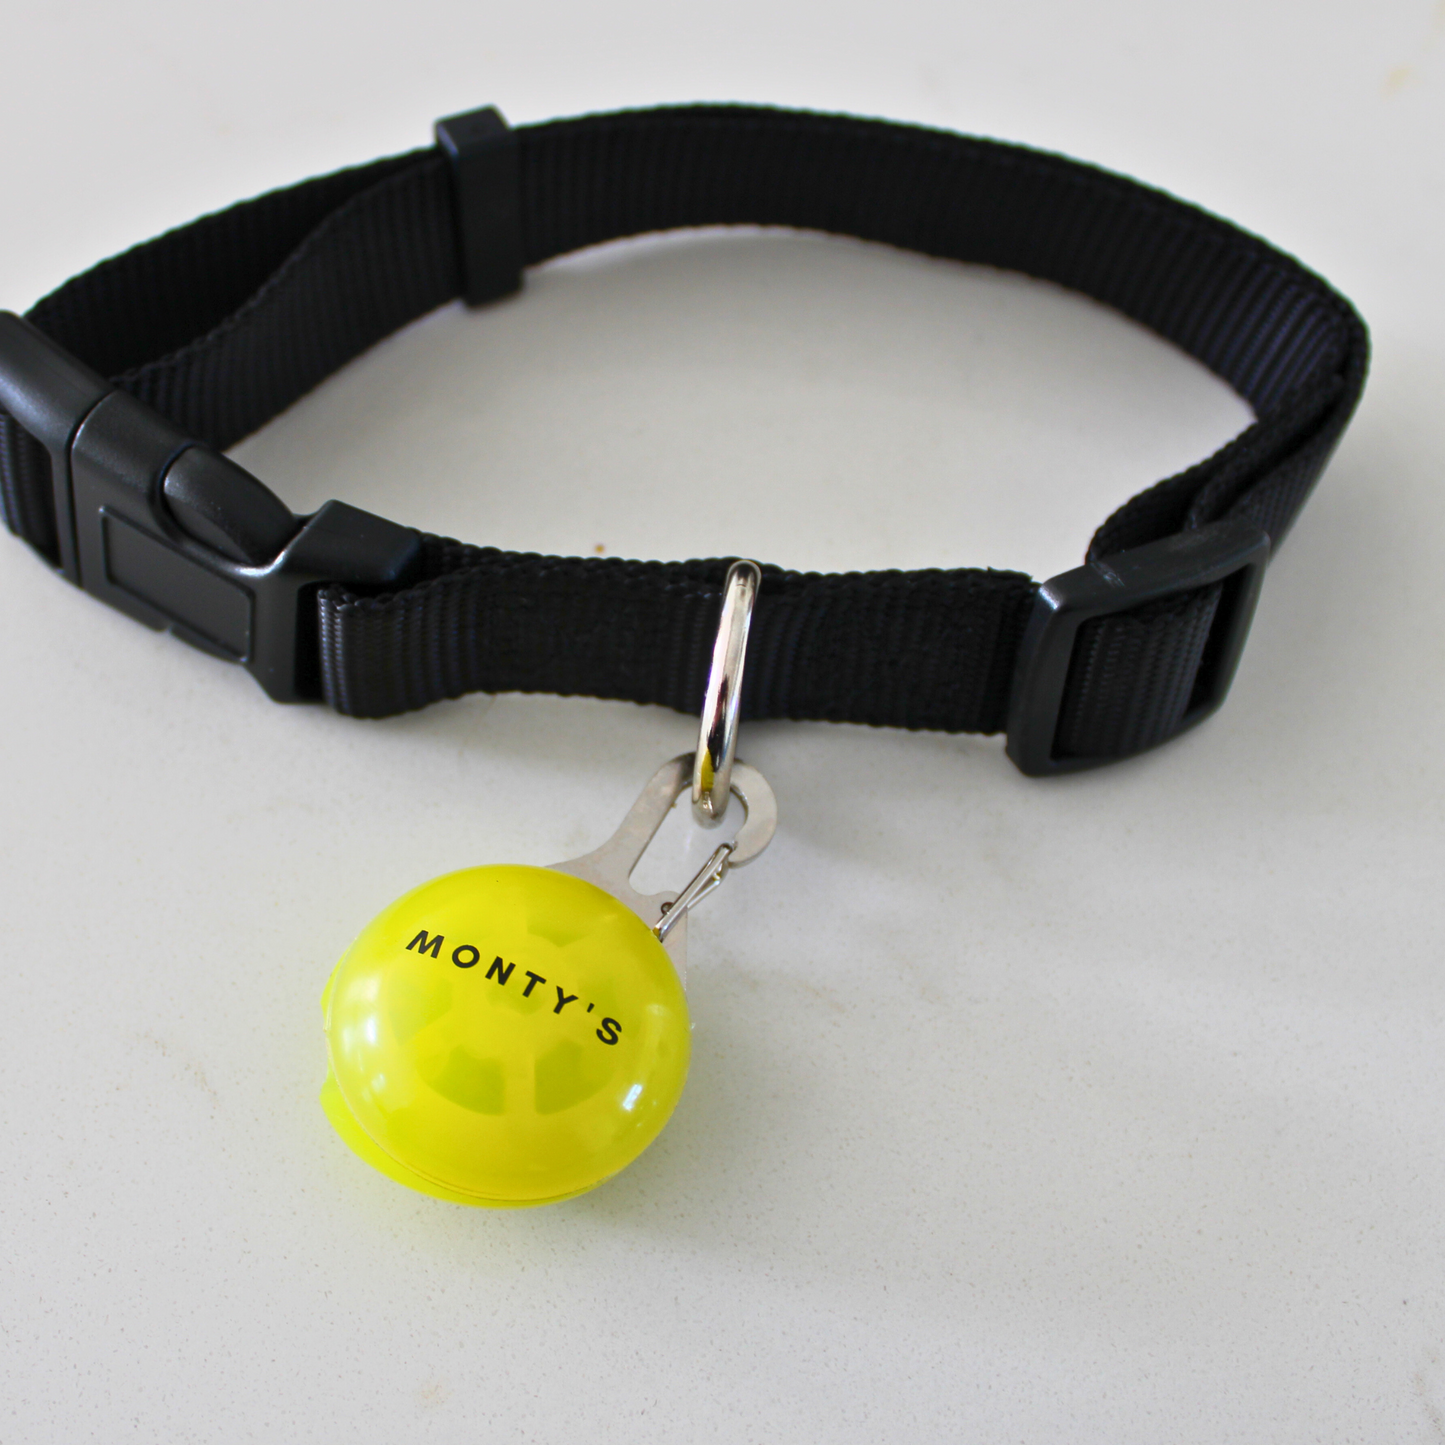 Dog Collar Light - USB Rechargeable